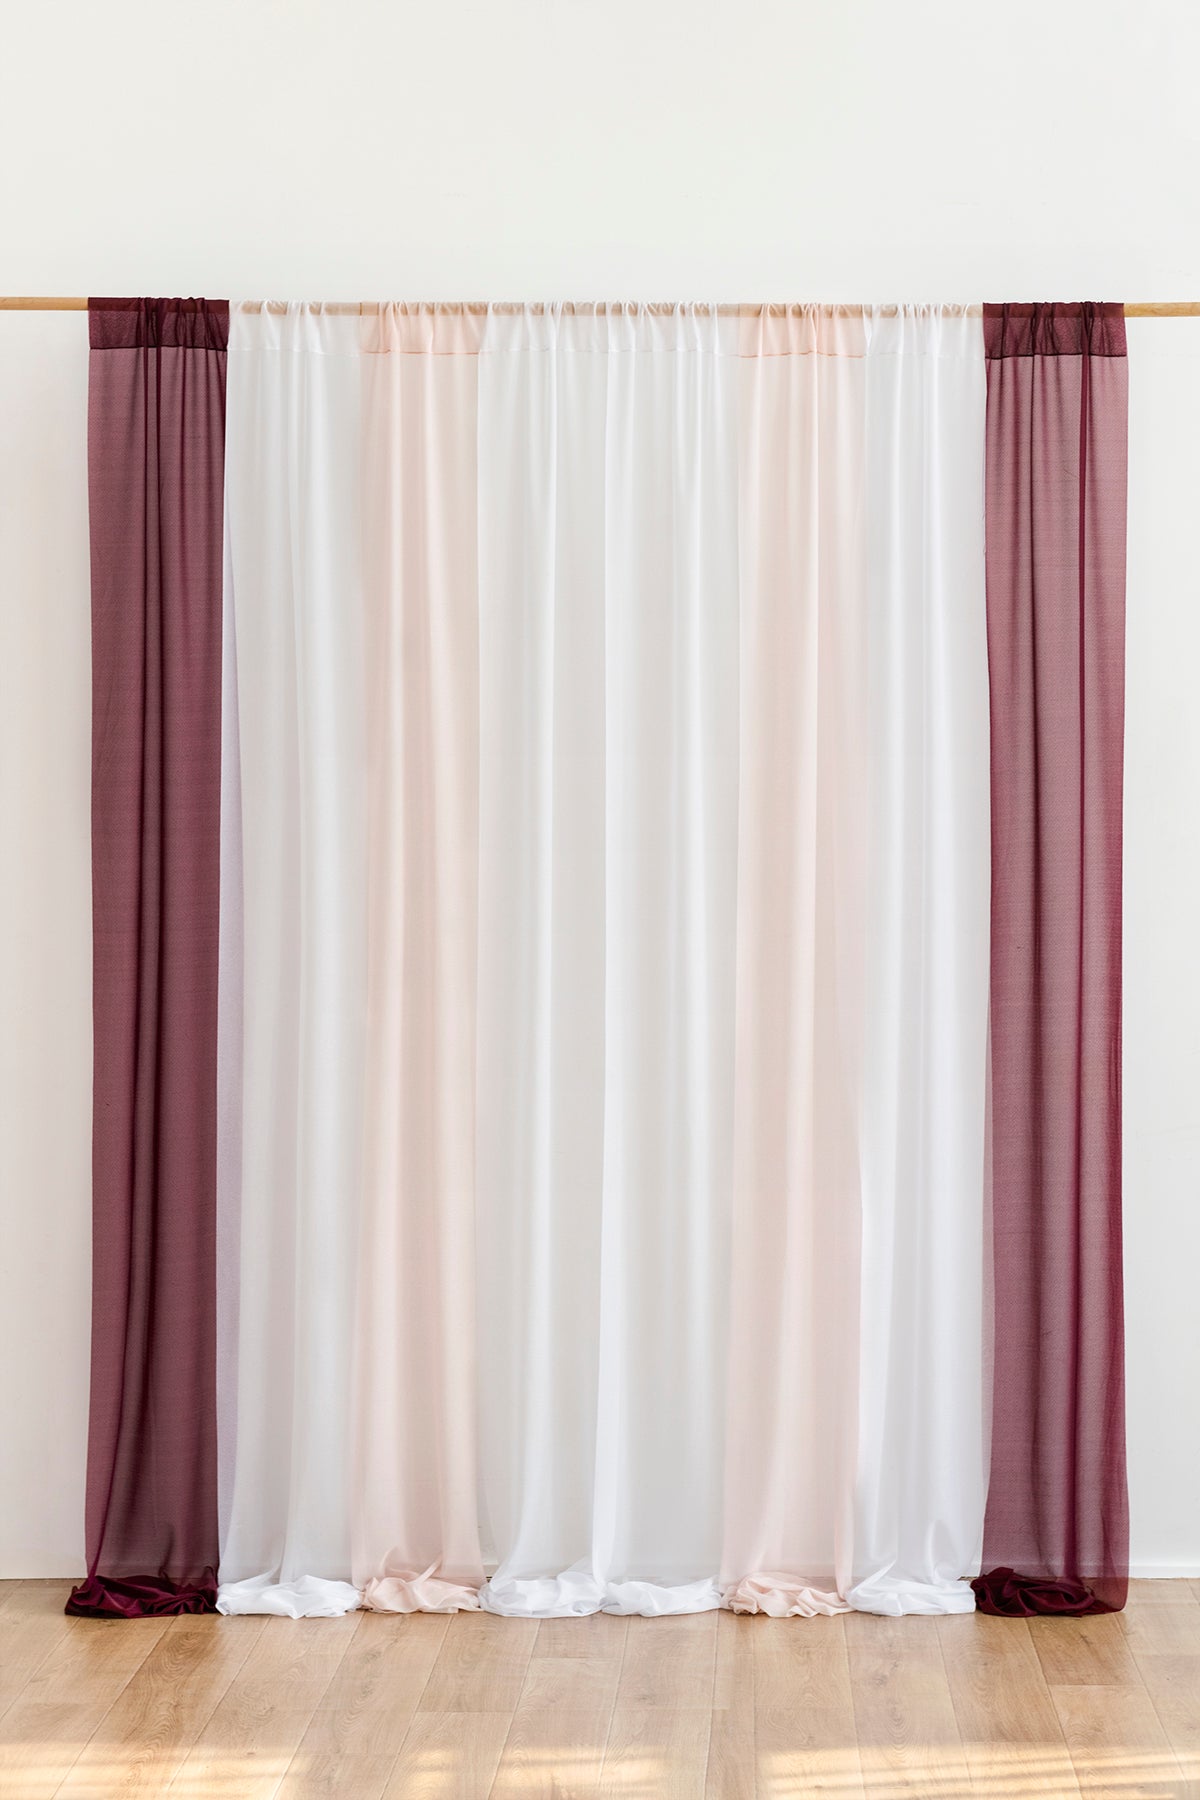 Backdrop Curtain in Romantic Marsala